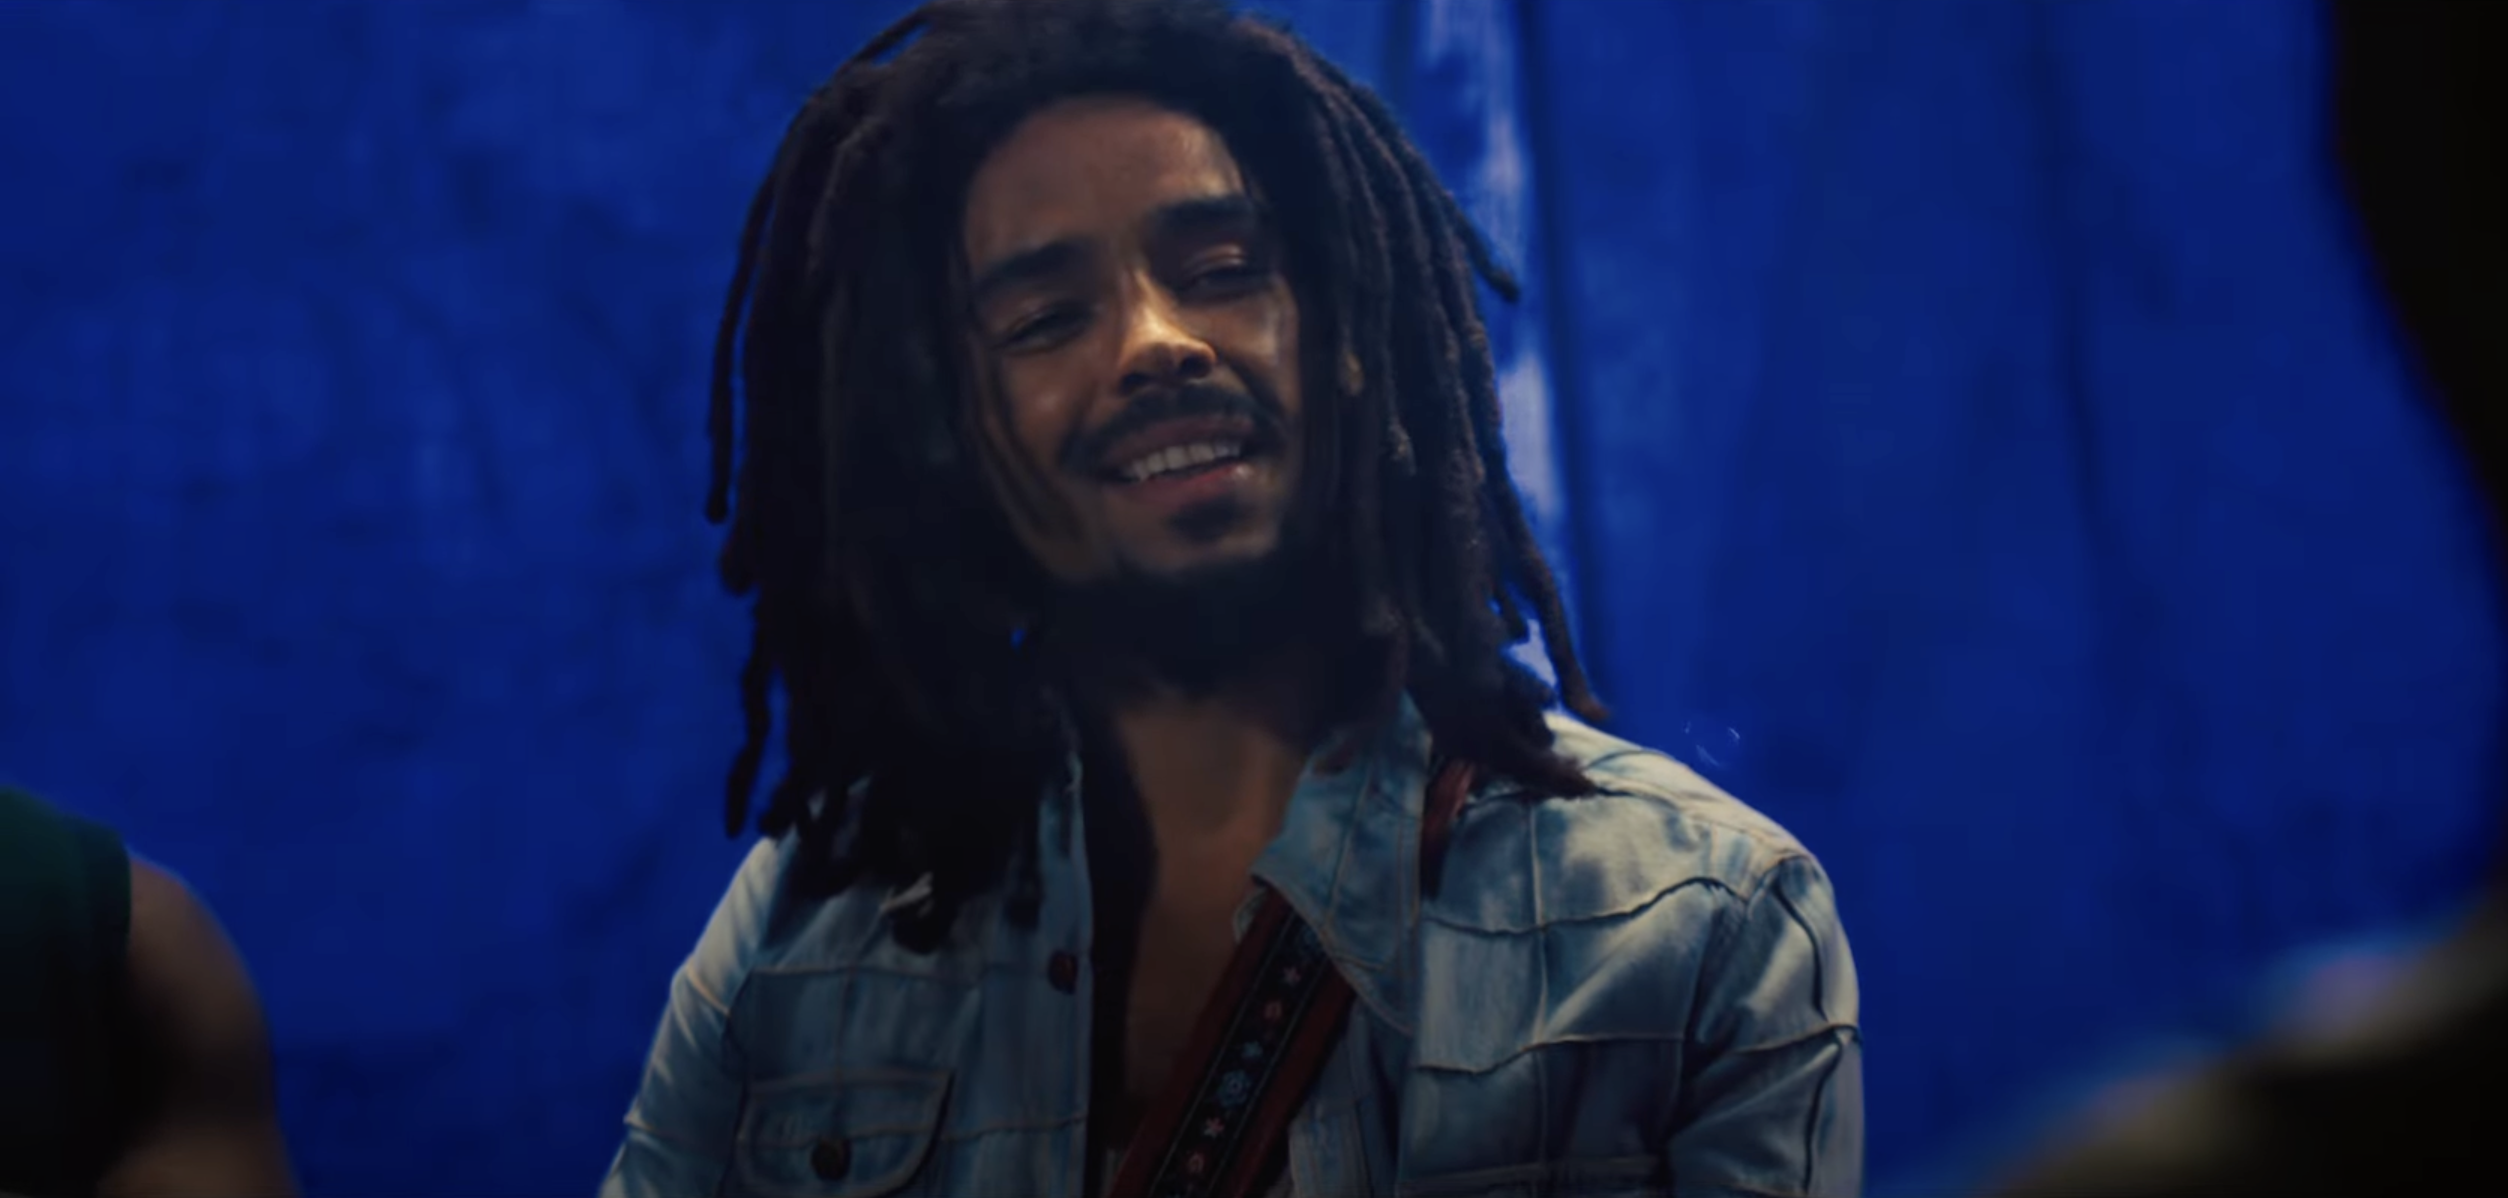 Bob Marley: One Love Trailer Previews Biopic